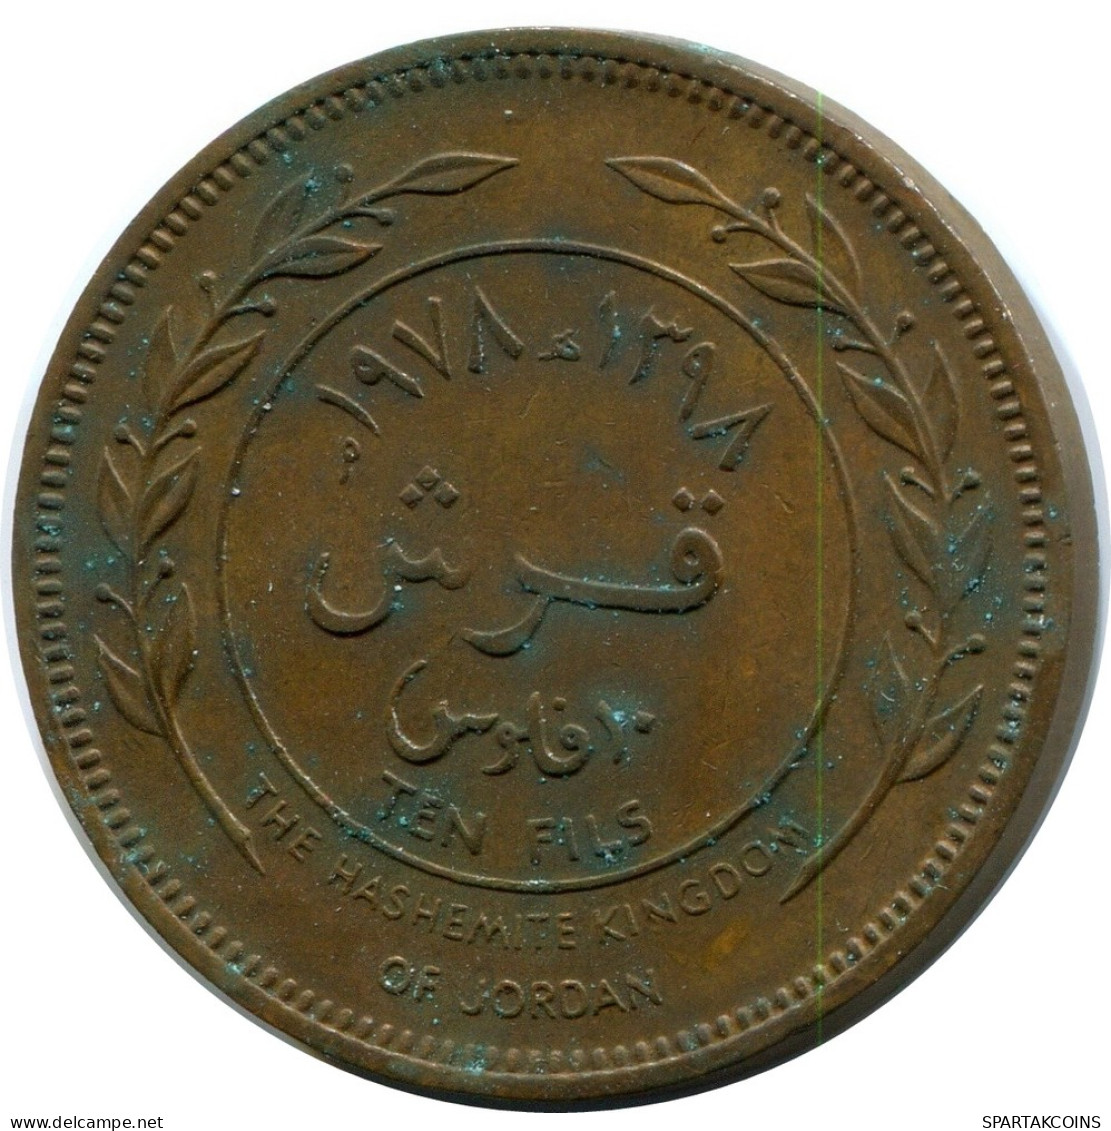 1 QIRSH 10 FILS 1398-1978 JORDAN Islamic Coin #AW795.U - Jordan